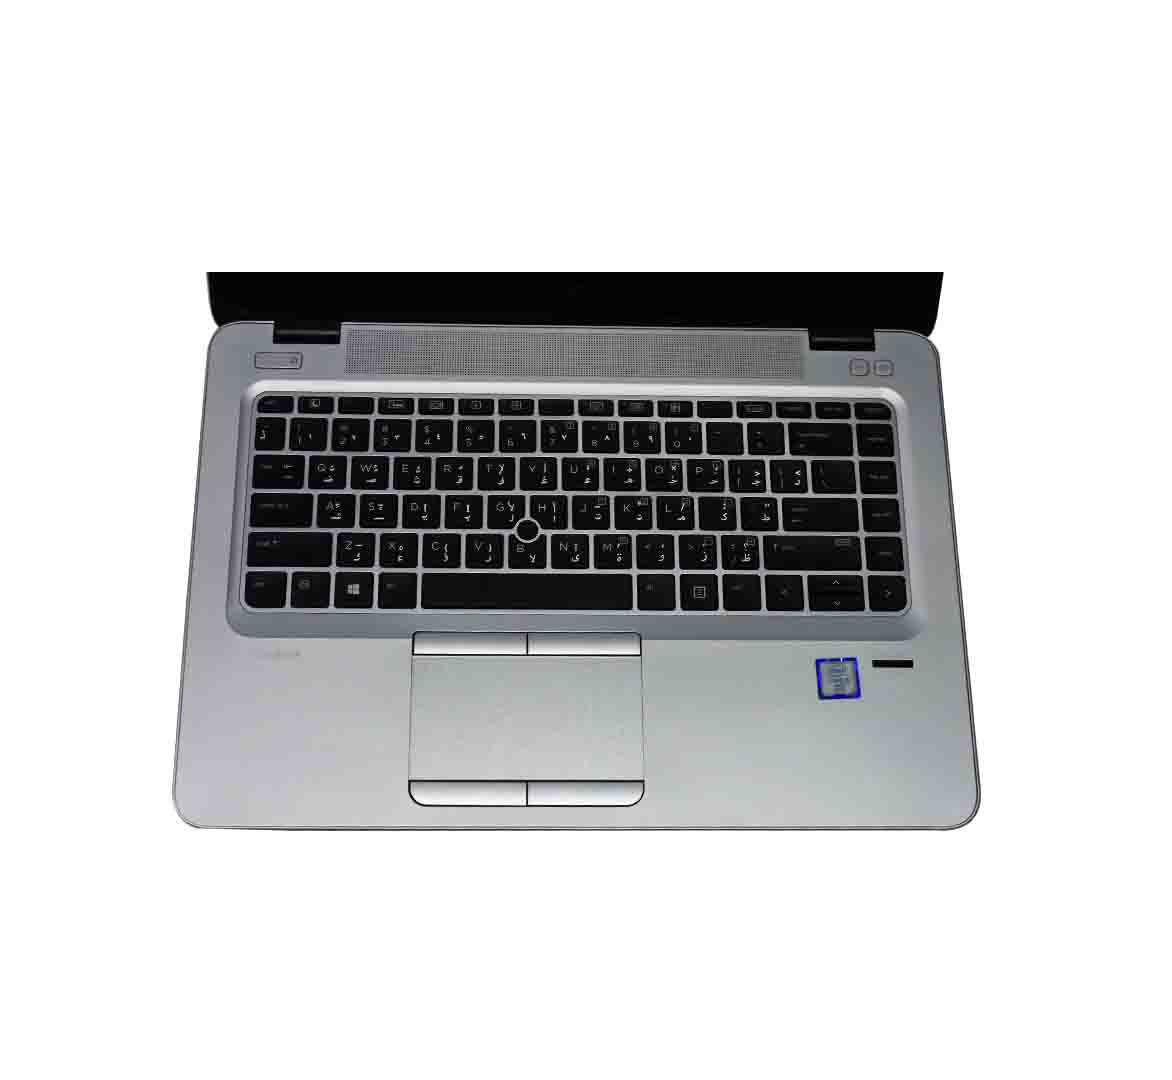 HP EliteBook 840 G3 Business Laptop, Intel Core i5-6th Gen. CPU, 4GB RAM, 500GB HDD, 14.1 inch Display, Windows 10 Pro, Refurbished Laptop